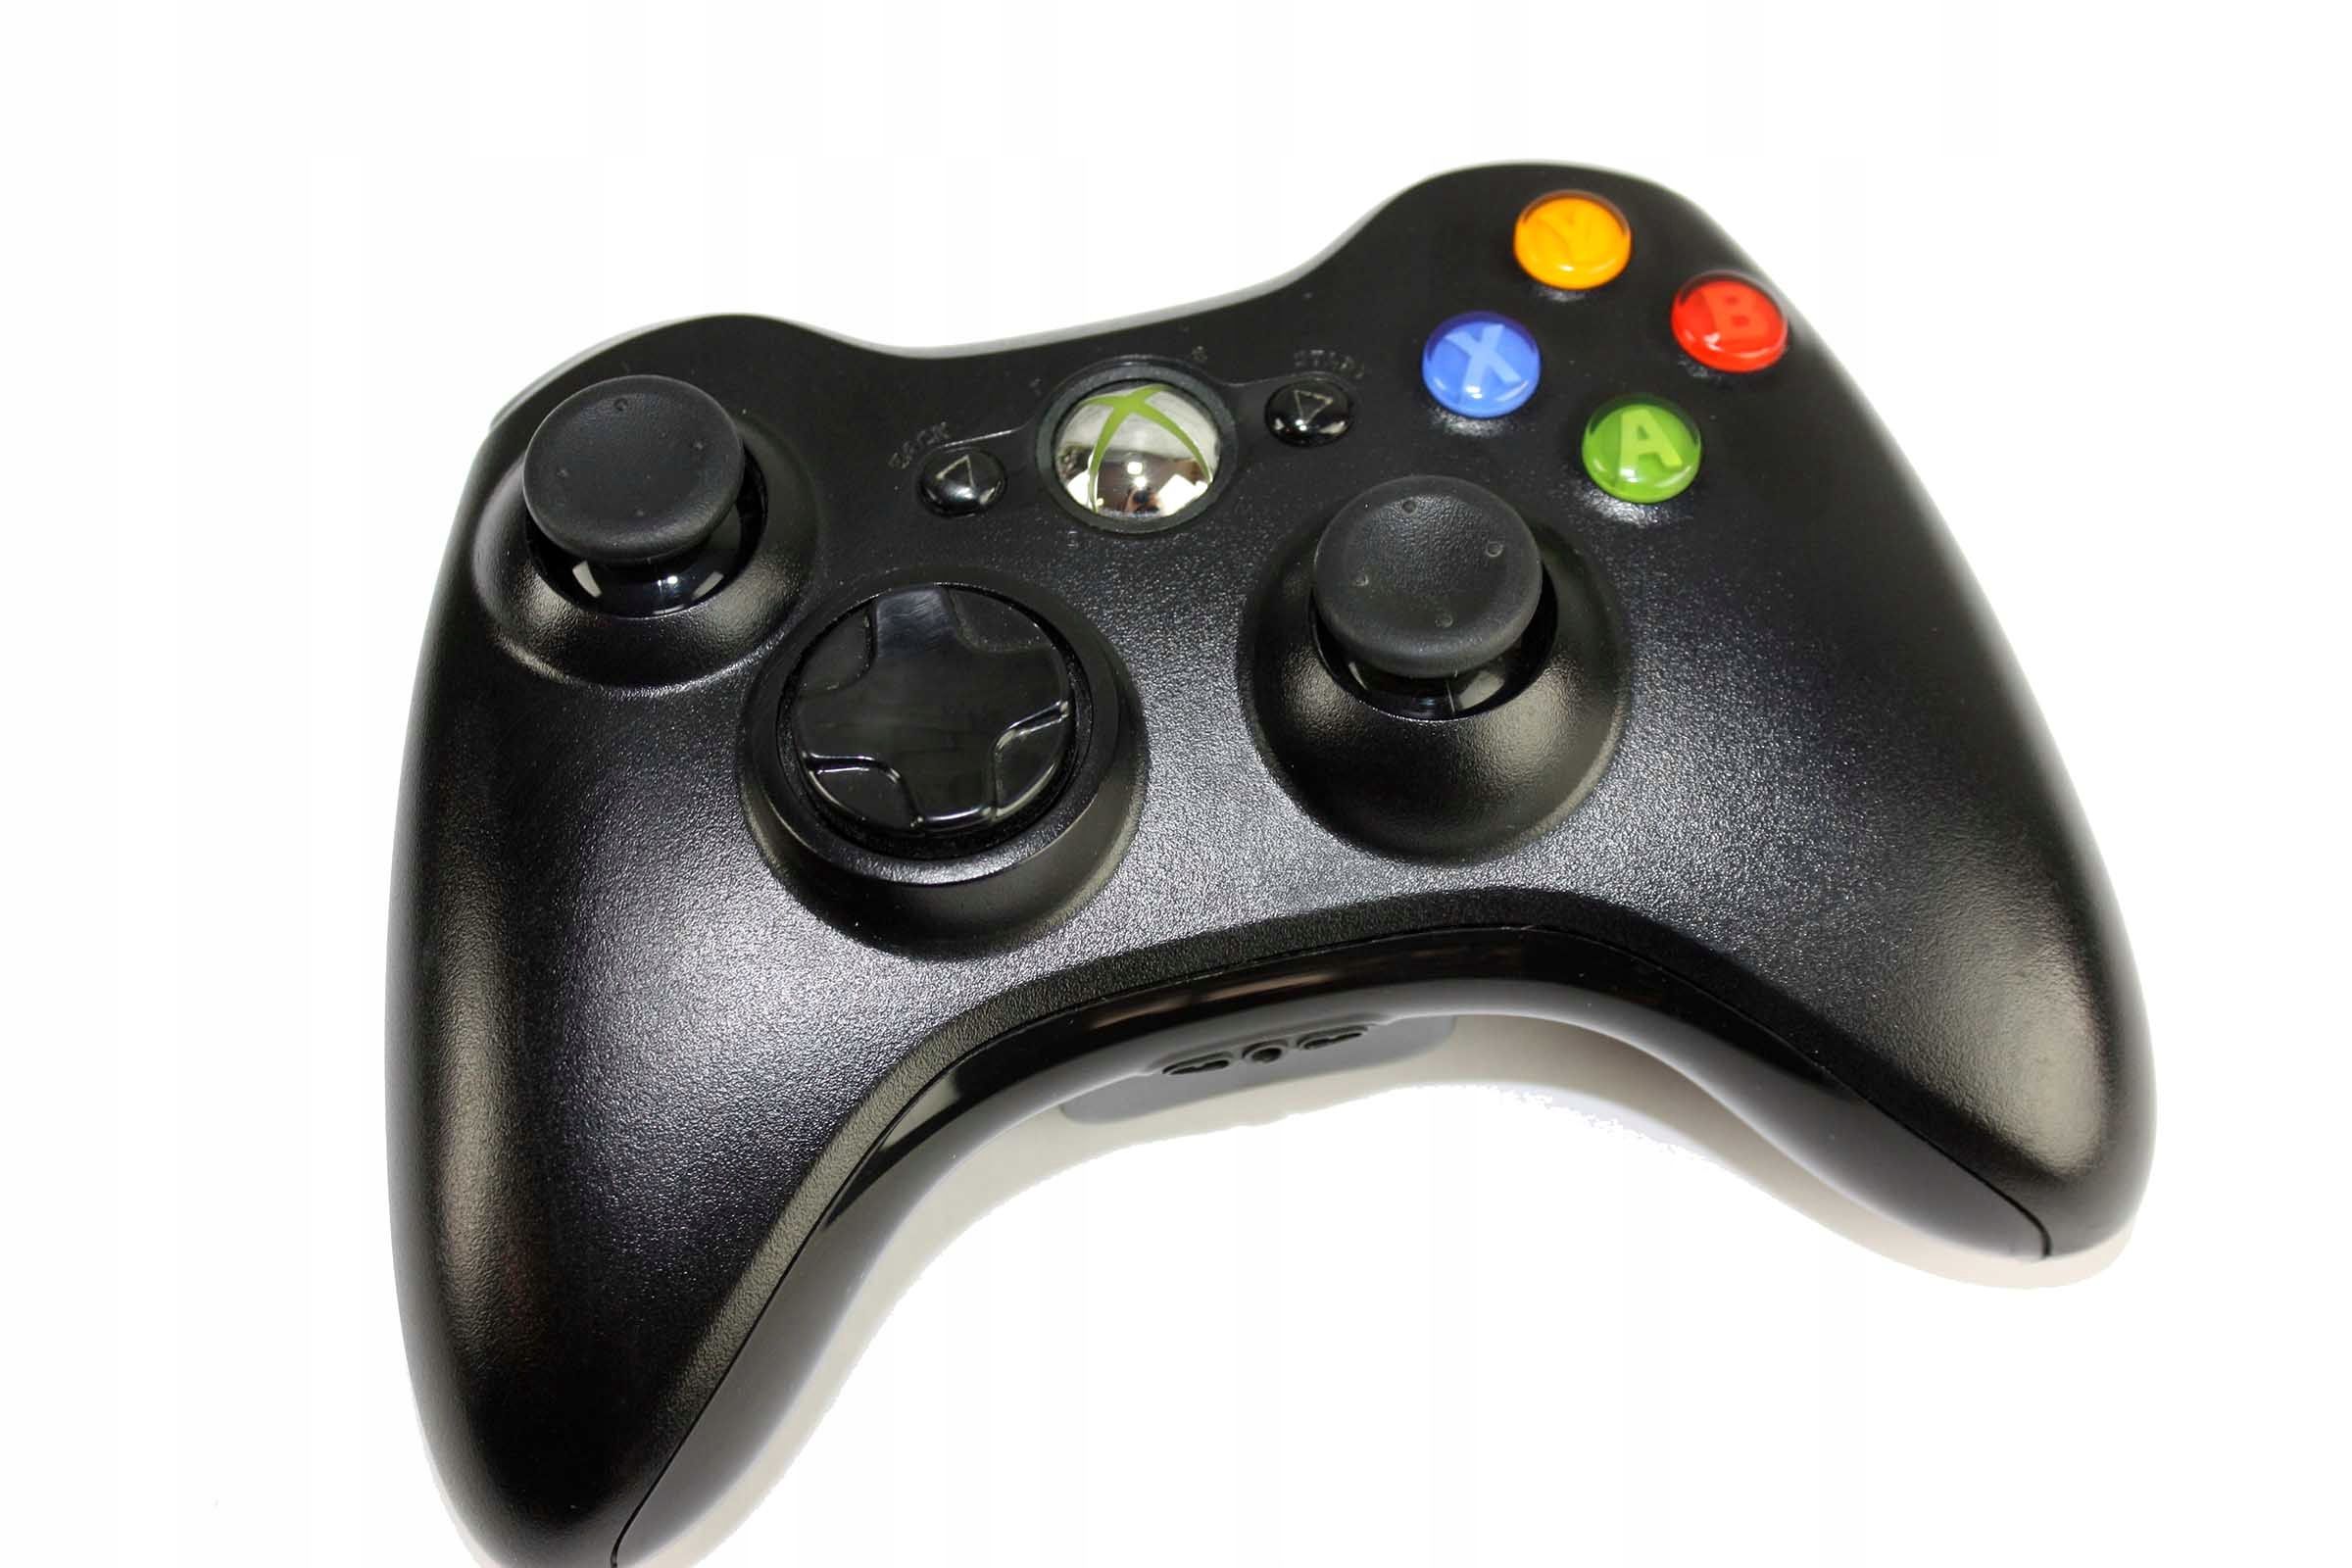 X360 геймпад. Геймпад Xbox 360 беспроводной. Джойстик Xbox 360 оригинал. Оригинальный проводной геймпад Xbox 360. Серебристый геймпад Xbox 360.